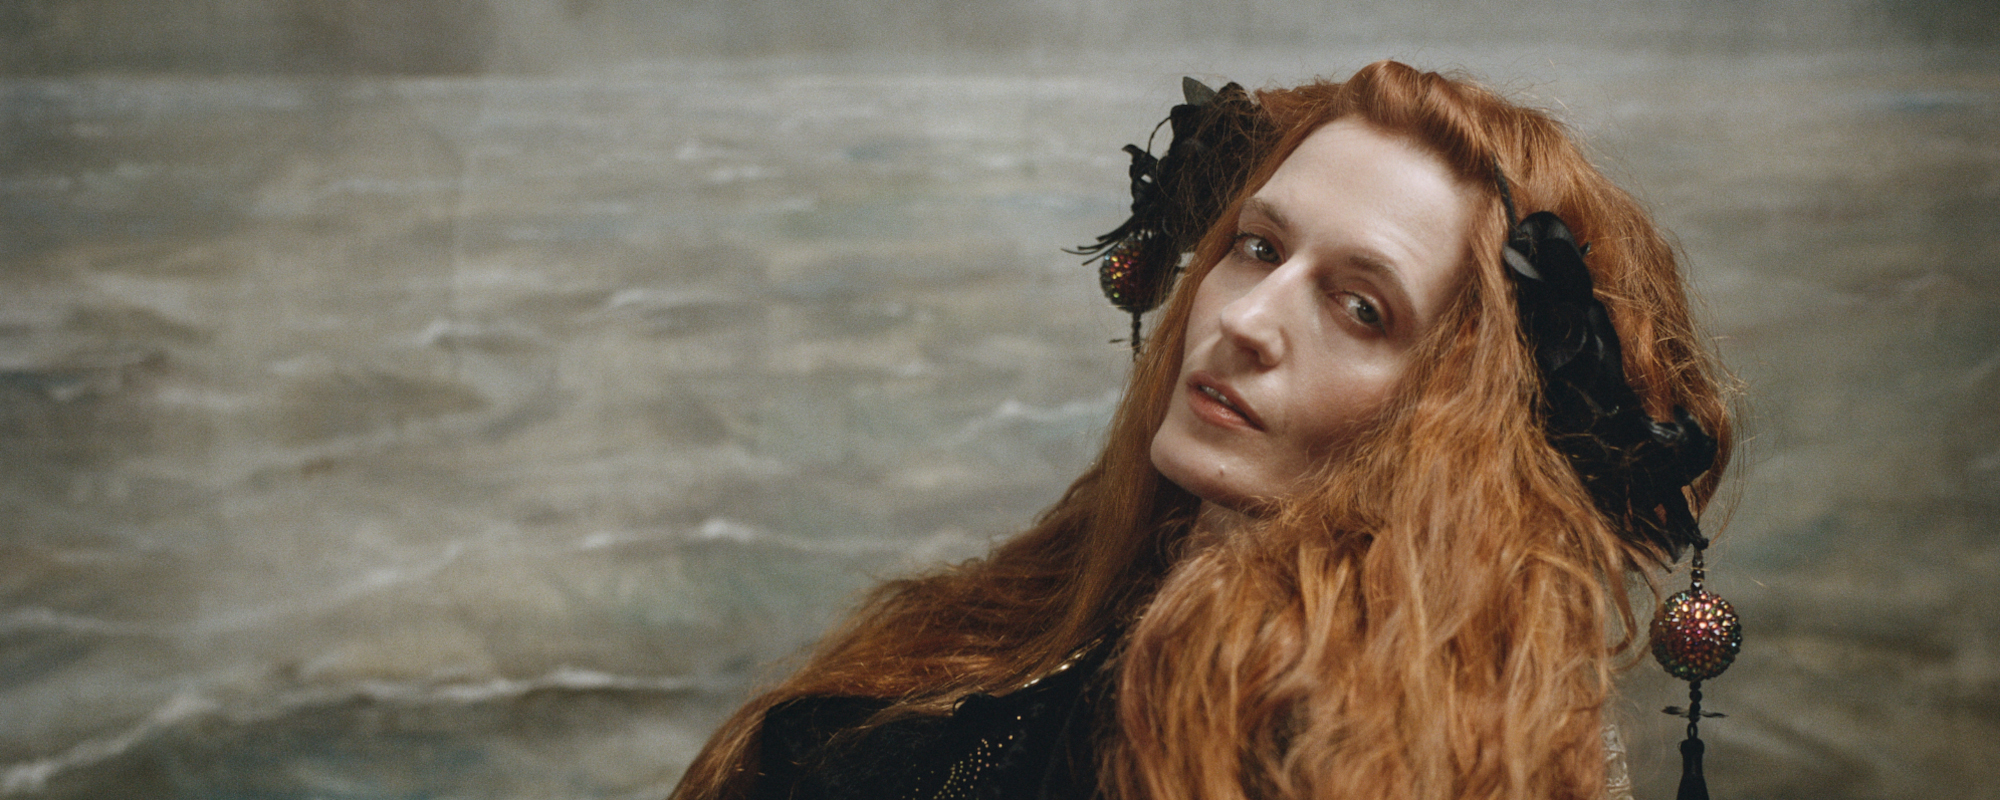 Florence + The Machine Shares Haunting New Single “Mermaids”